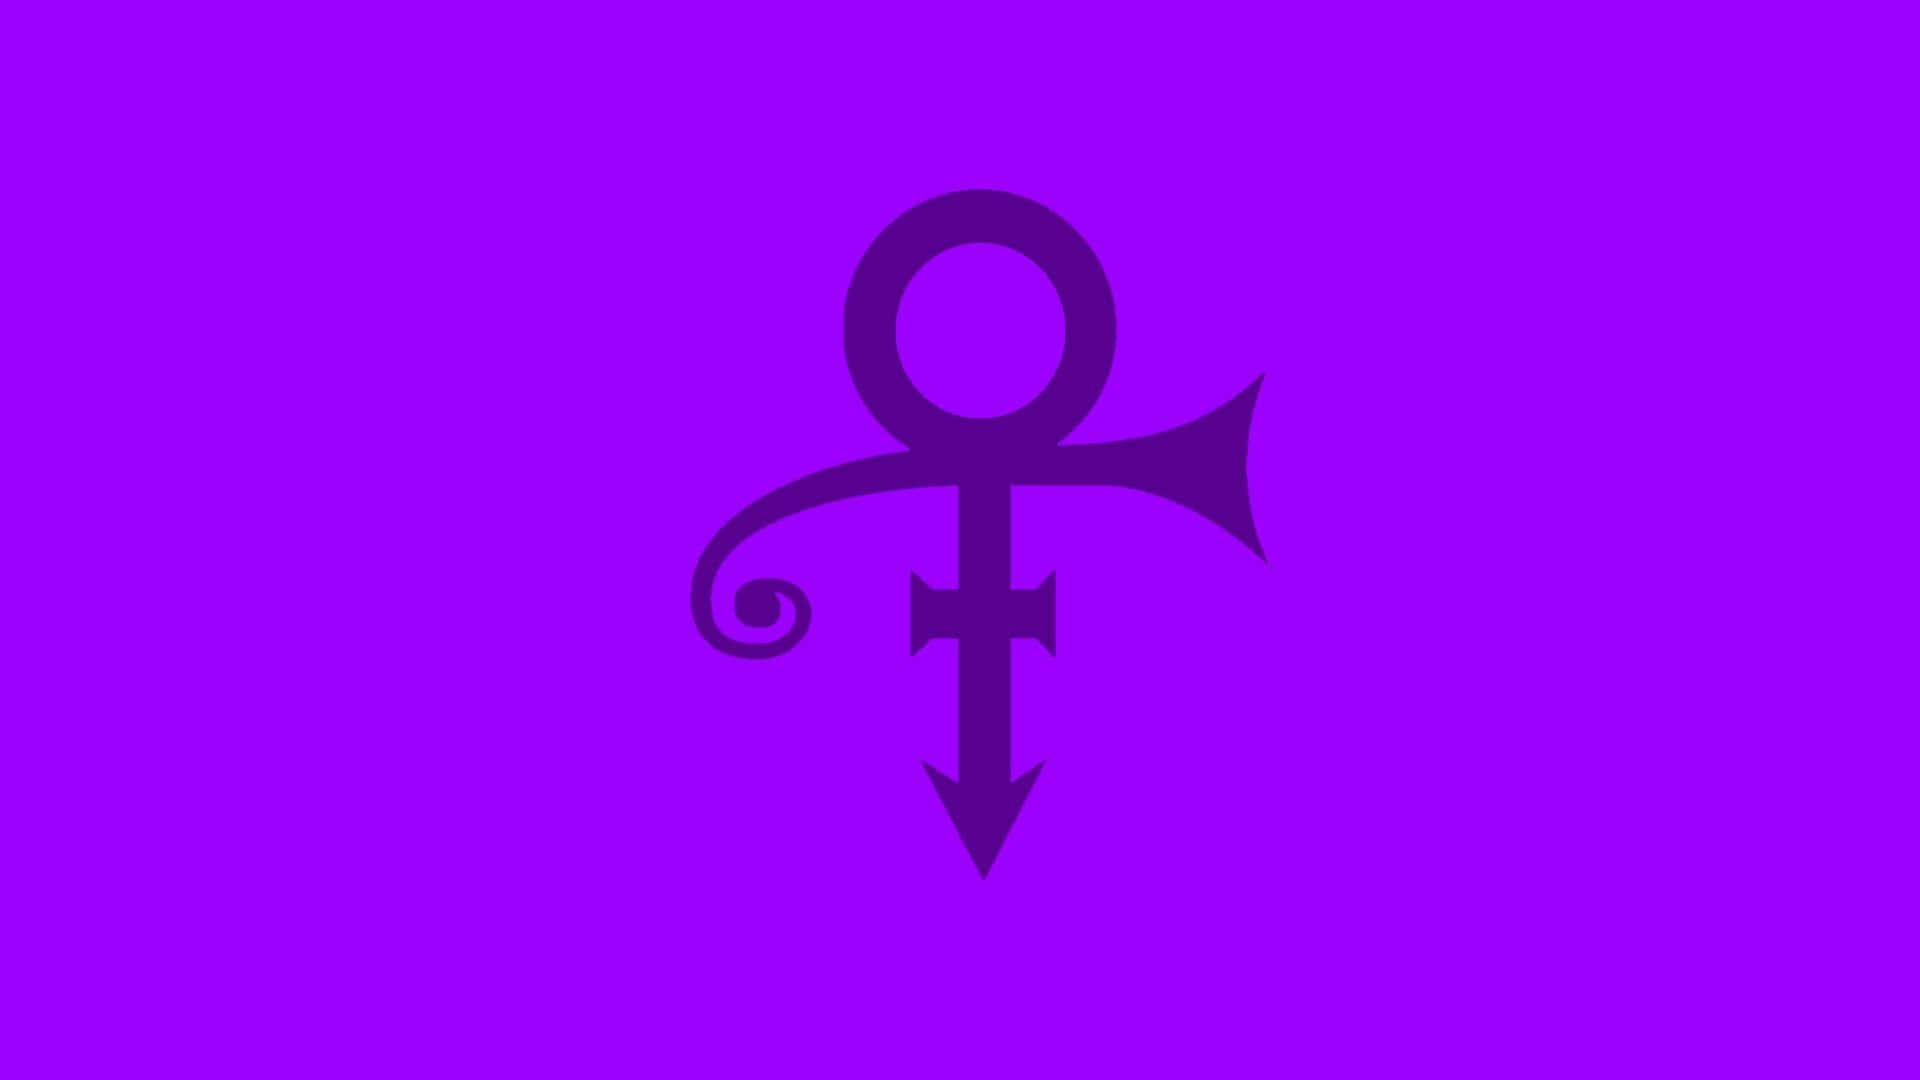 Prince Symbol Minimalist Purple Poster Wallpaper